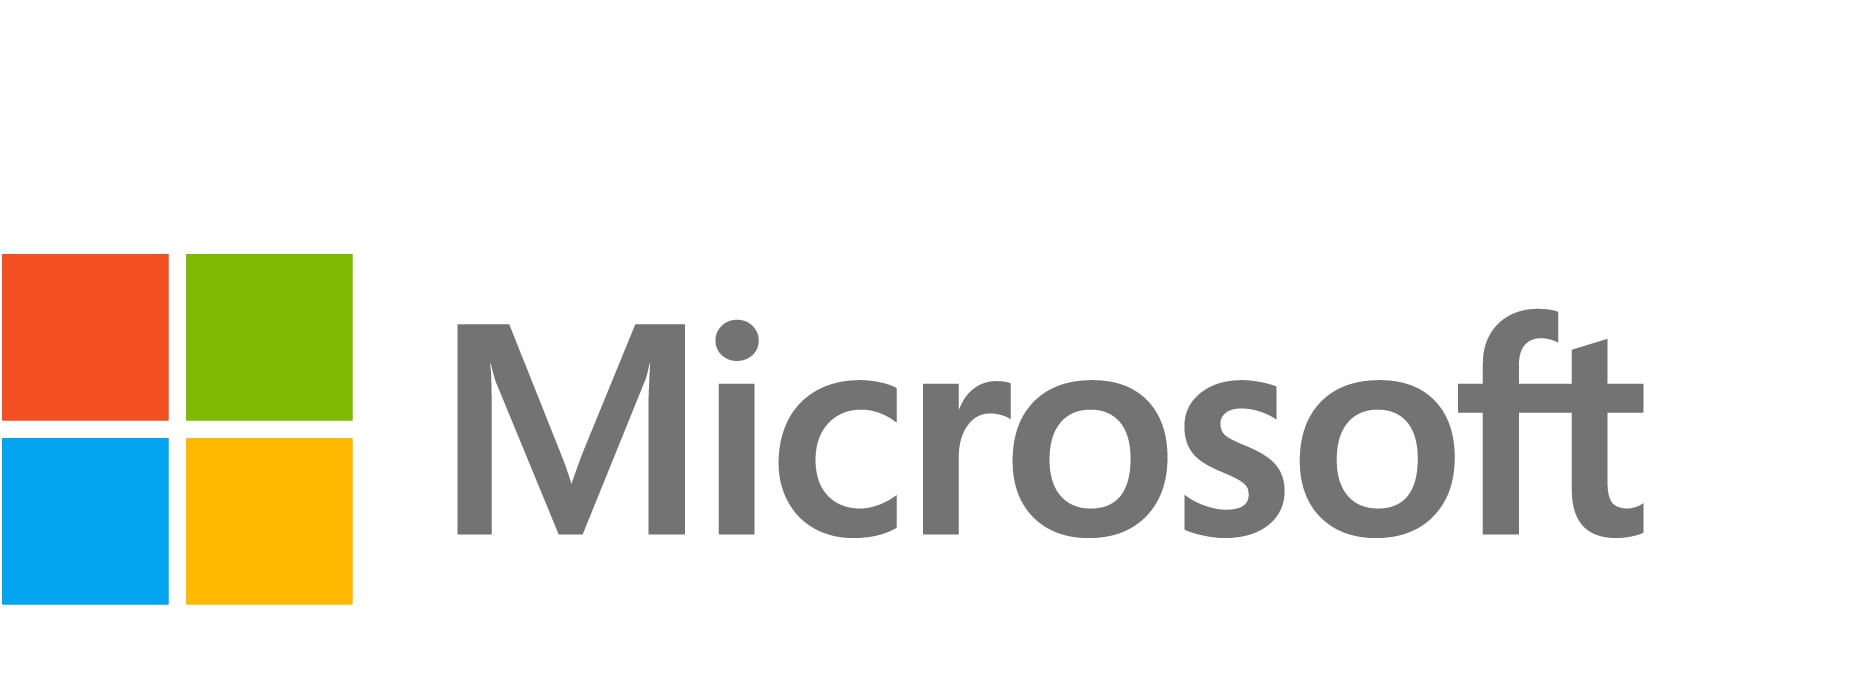 Microsoft Visual Studio Professional 2022 - license - 1 user - C5E-01412 -  Programming Languages 